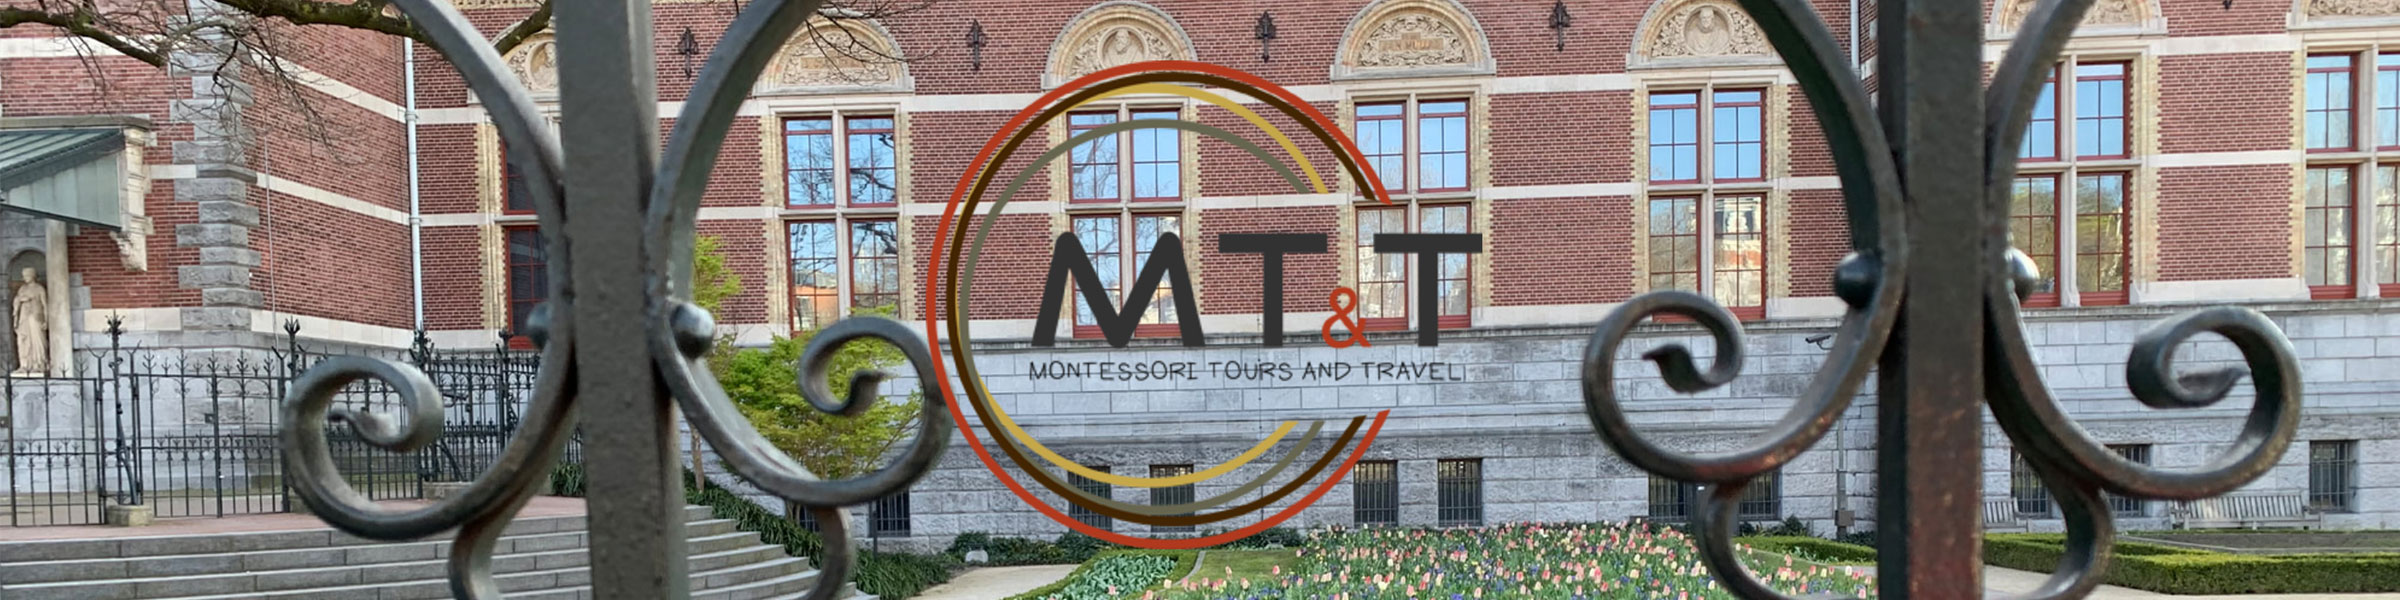 Montessori Tours and Travel